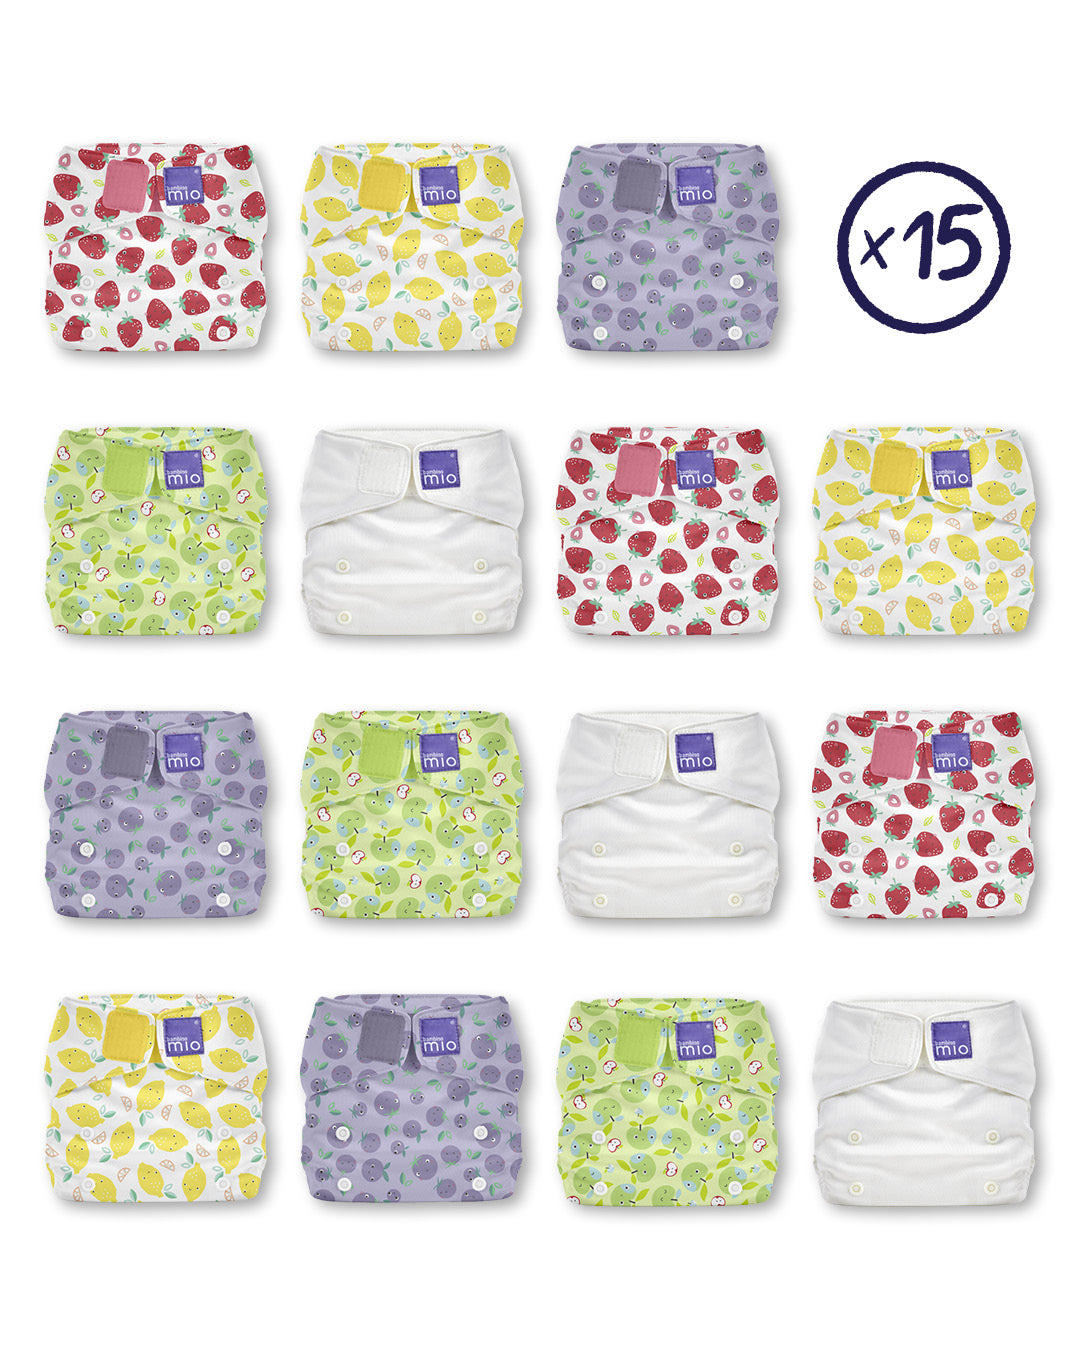 miosolo 15 diaper bundle